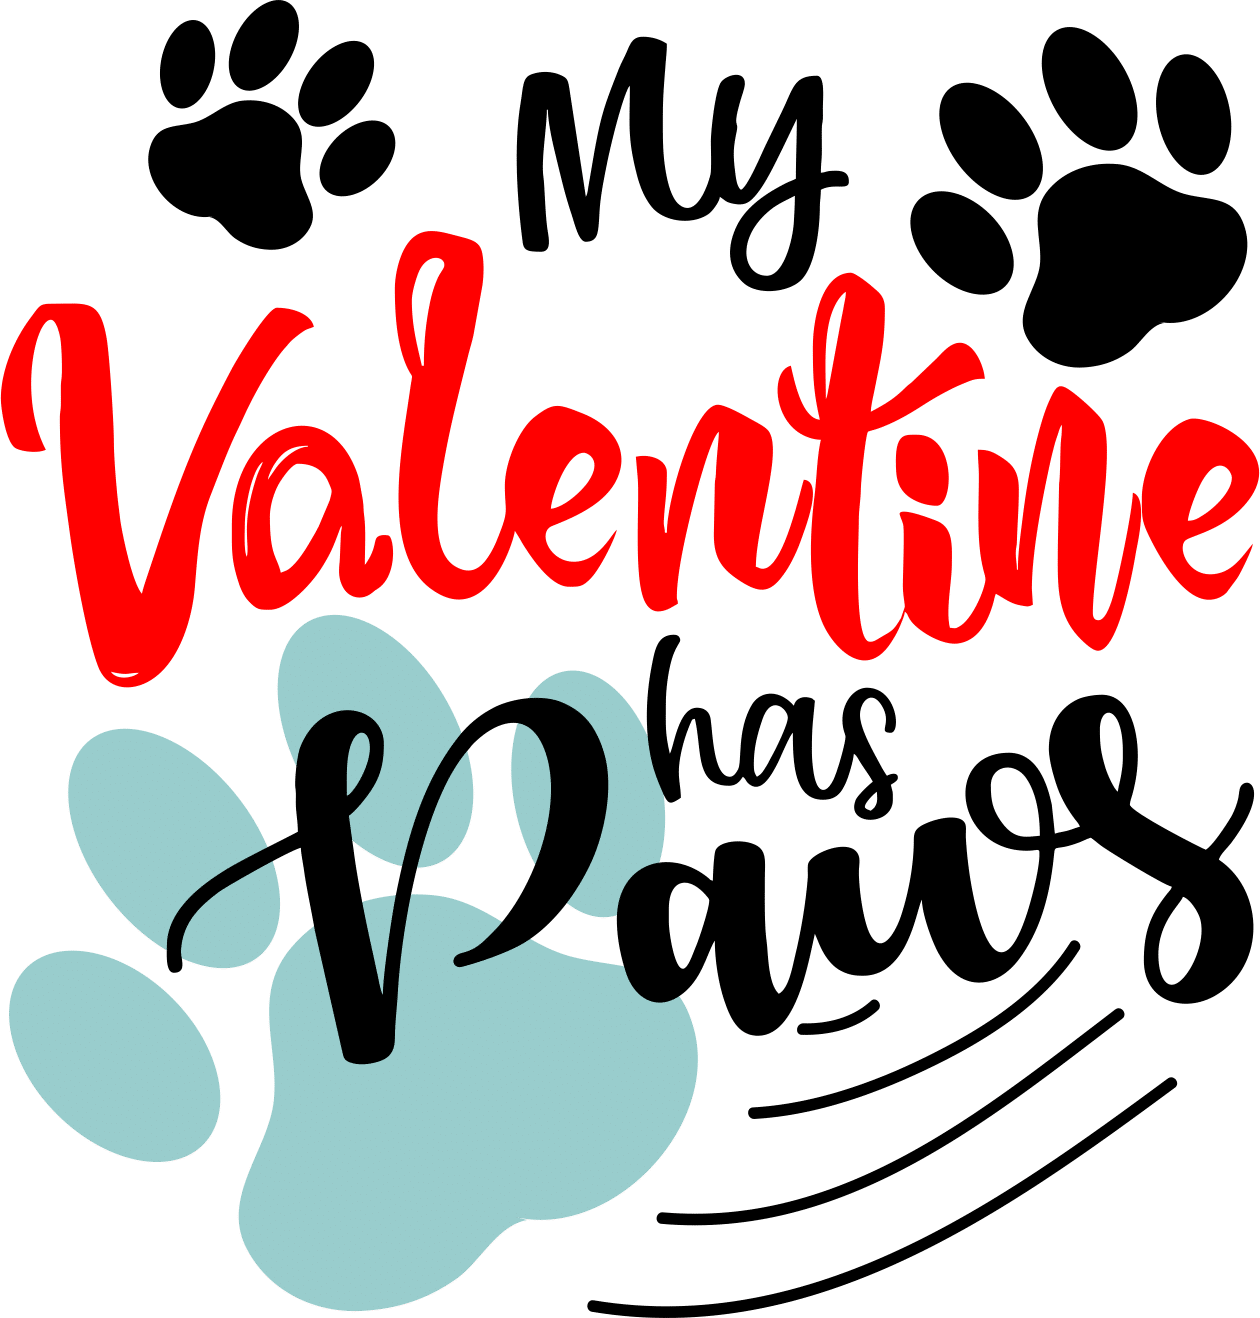 My-valentine-has-paws